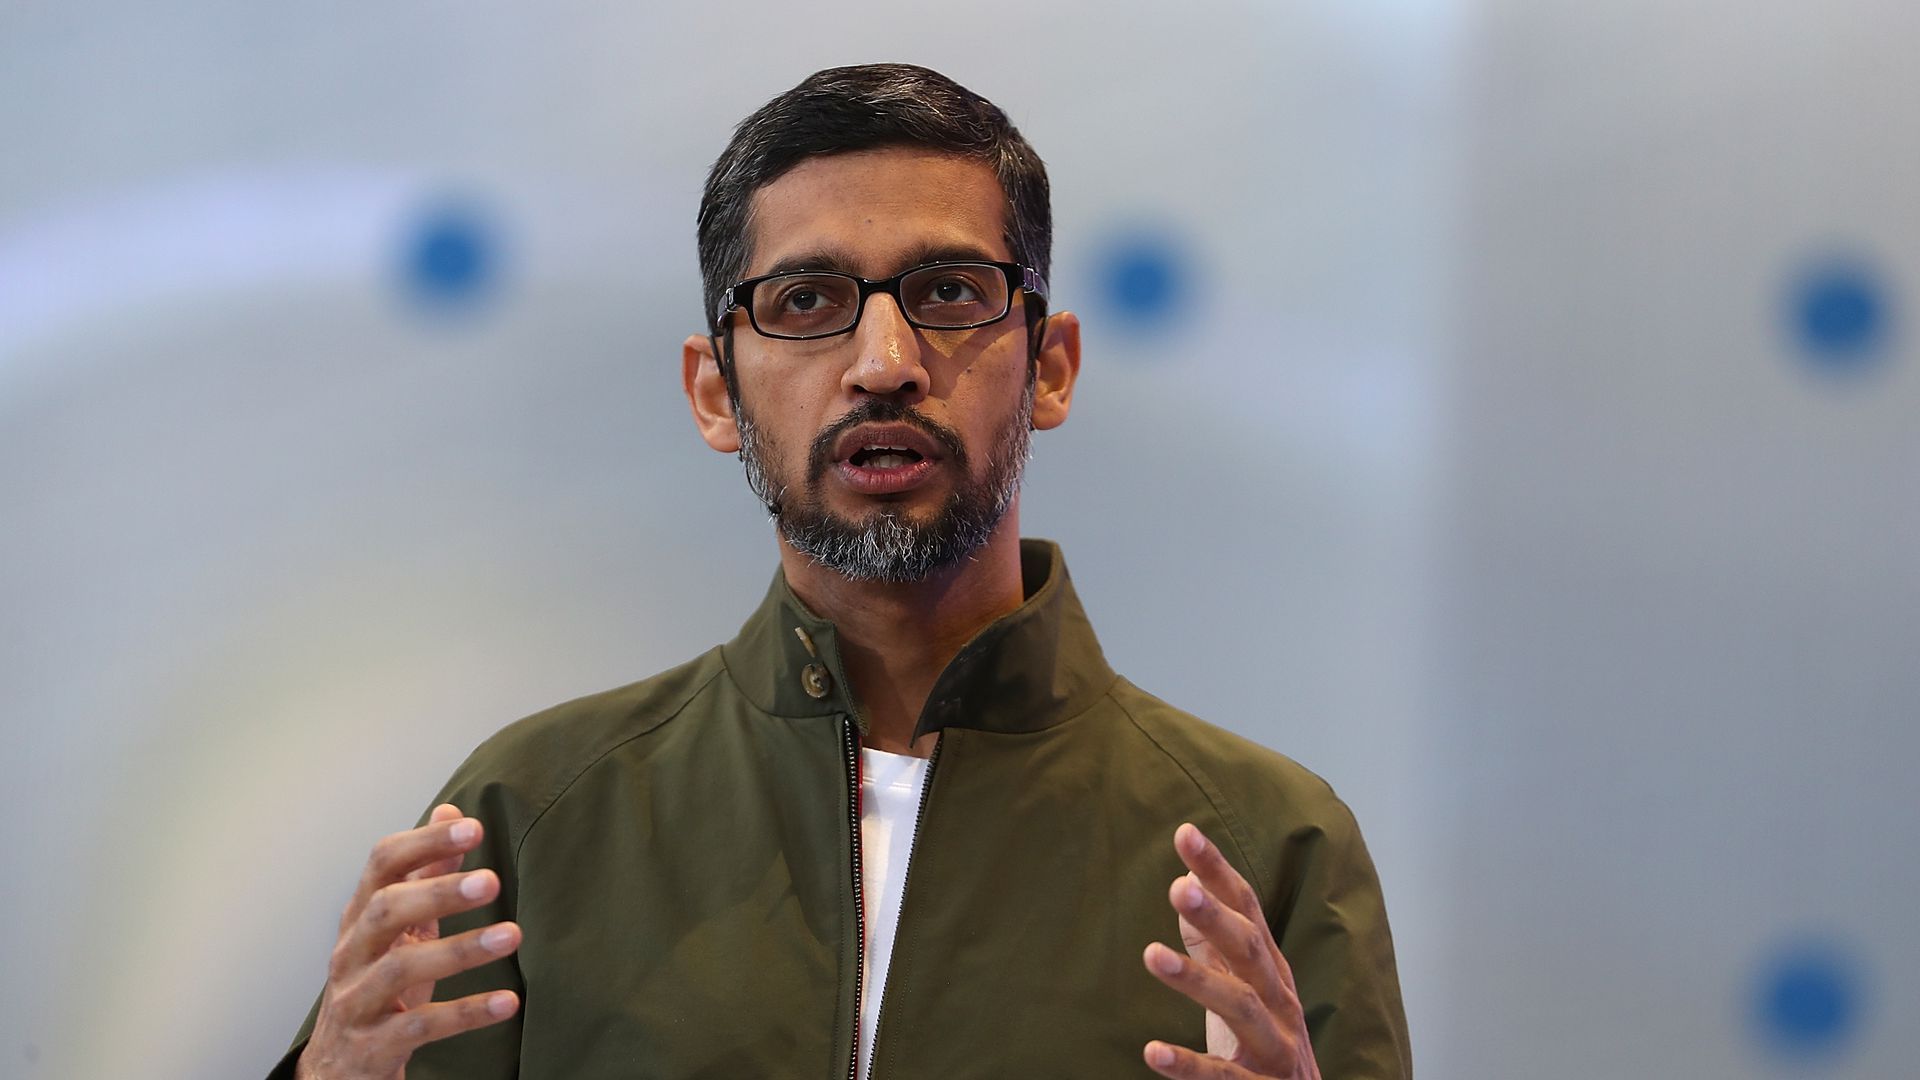 Google CEO Sundar Pichai at the Google I/O 2018 Conference. 